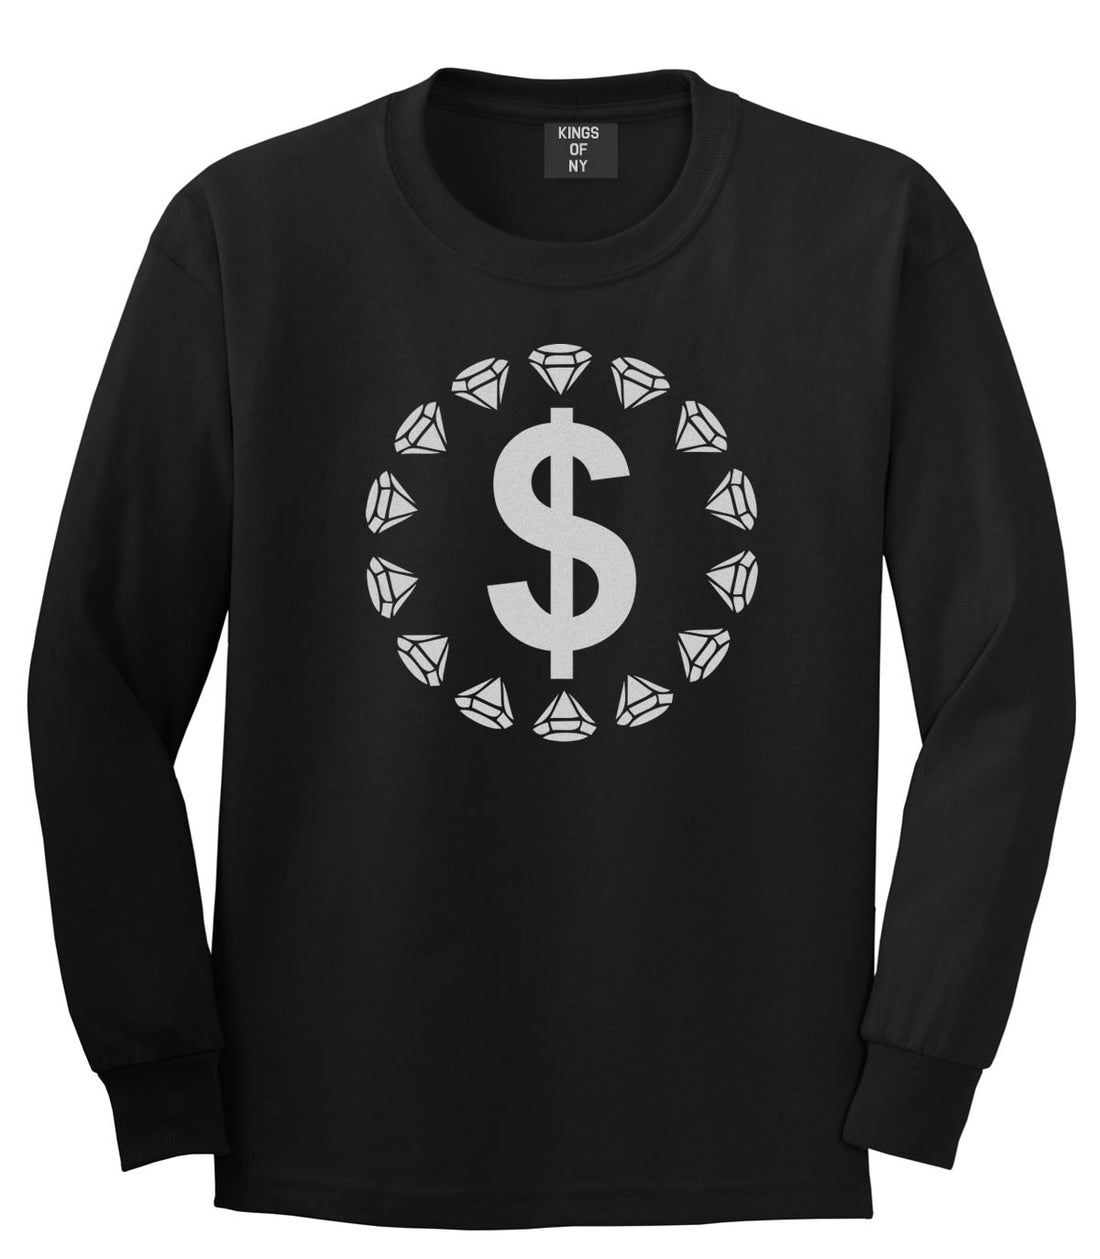 Diamonds Money Sign Logo Long Sleeve T-Shirt in Black by Kings Of NY